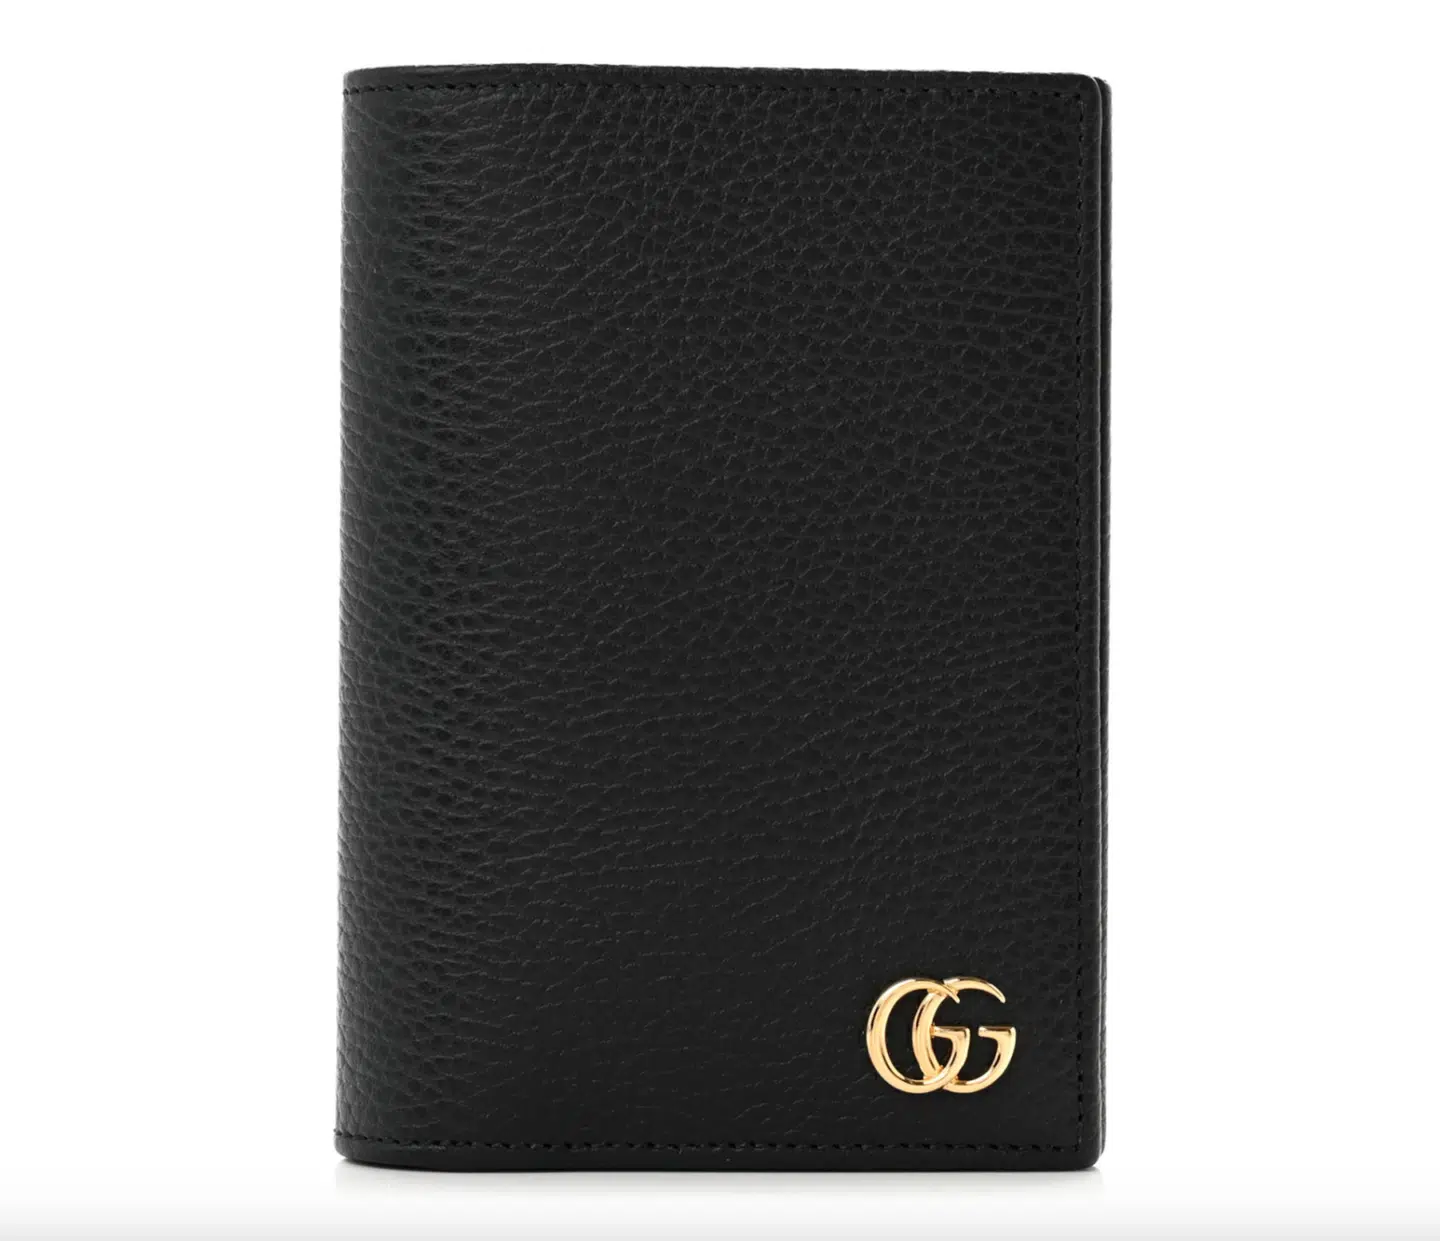 9 Luxurious Gucci Passport Holder Picks